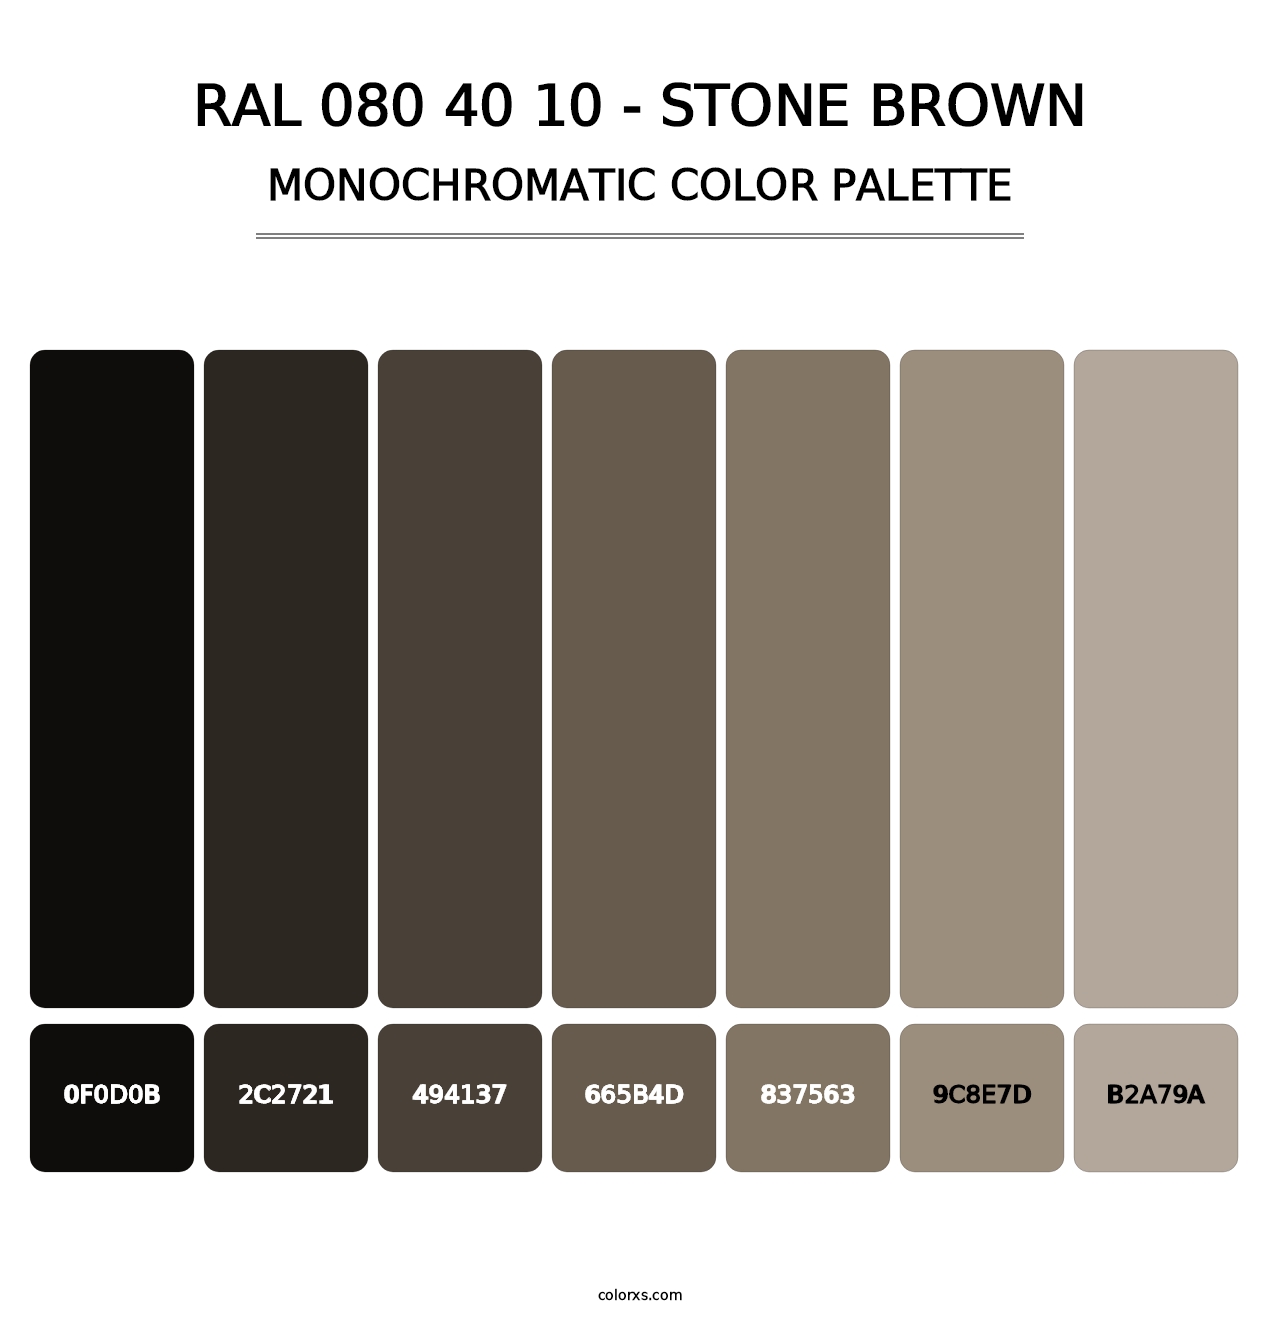 RAL 080 40 10 - Stone Brown - Monochromatic Color Palette